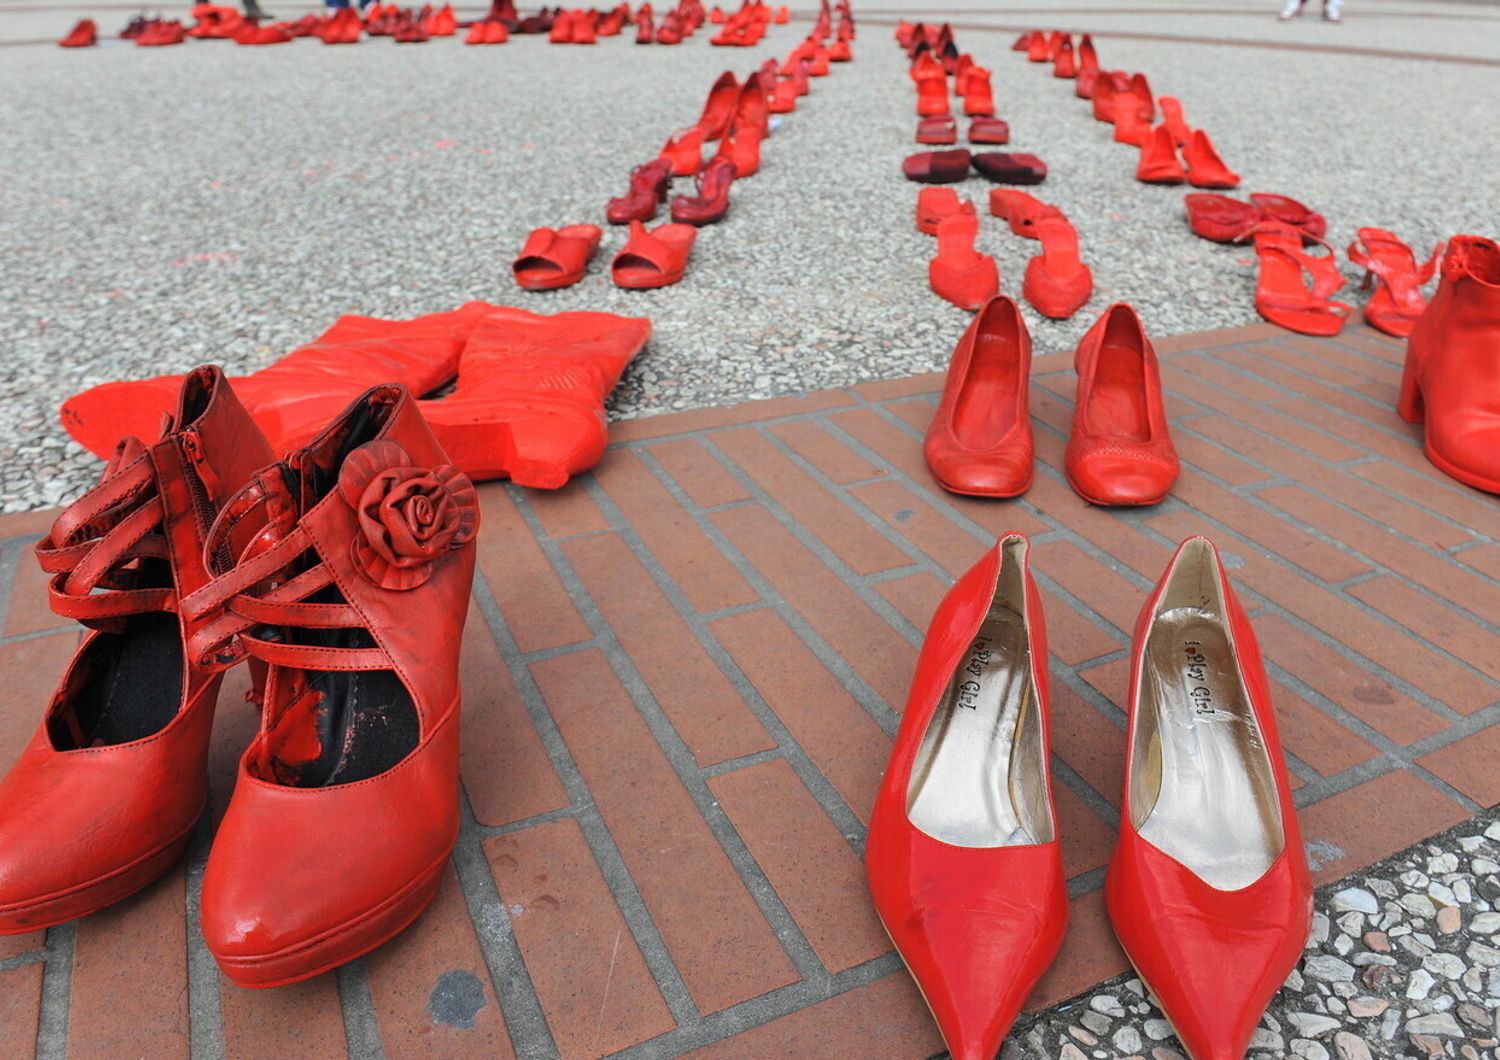 &nbsp;Scarpe rosse simbolo violenza donne (Agf)